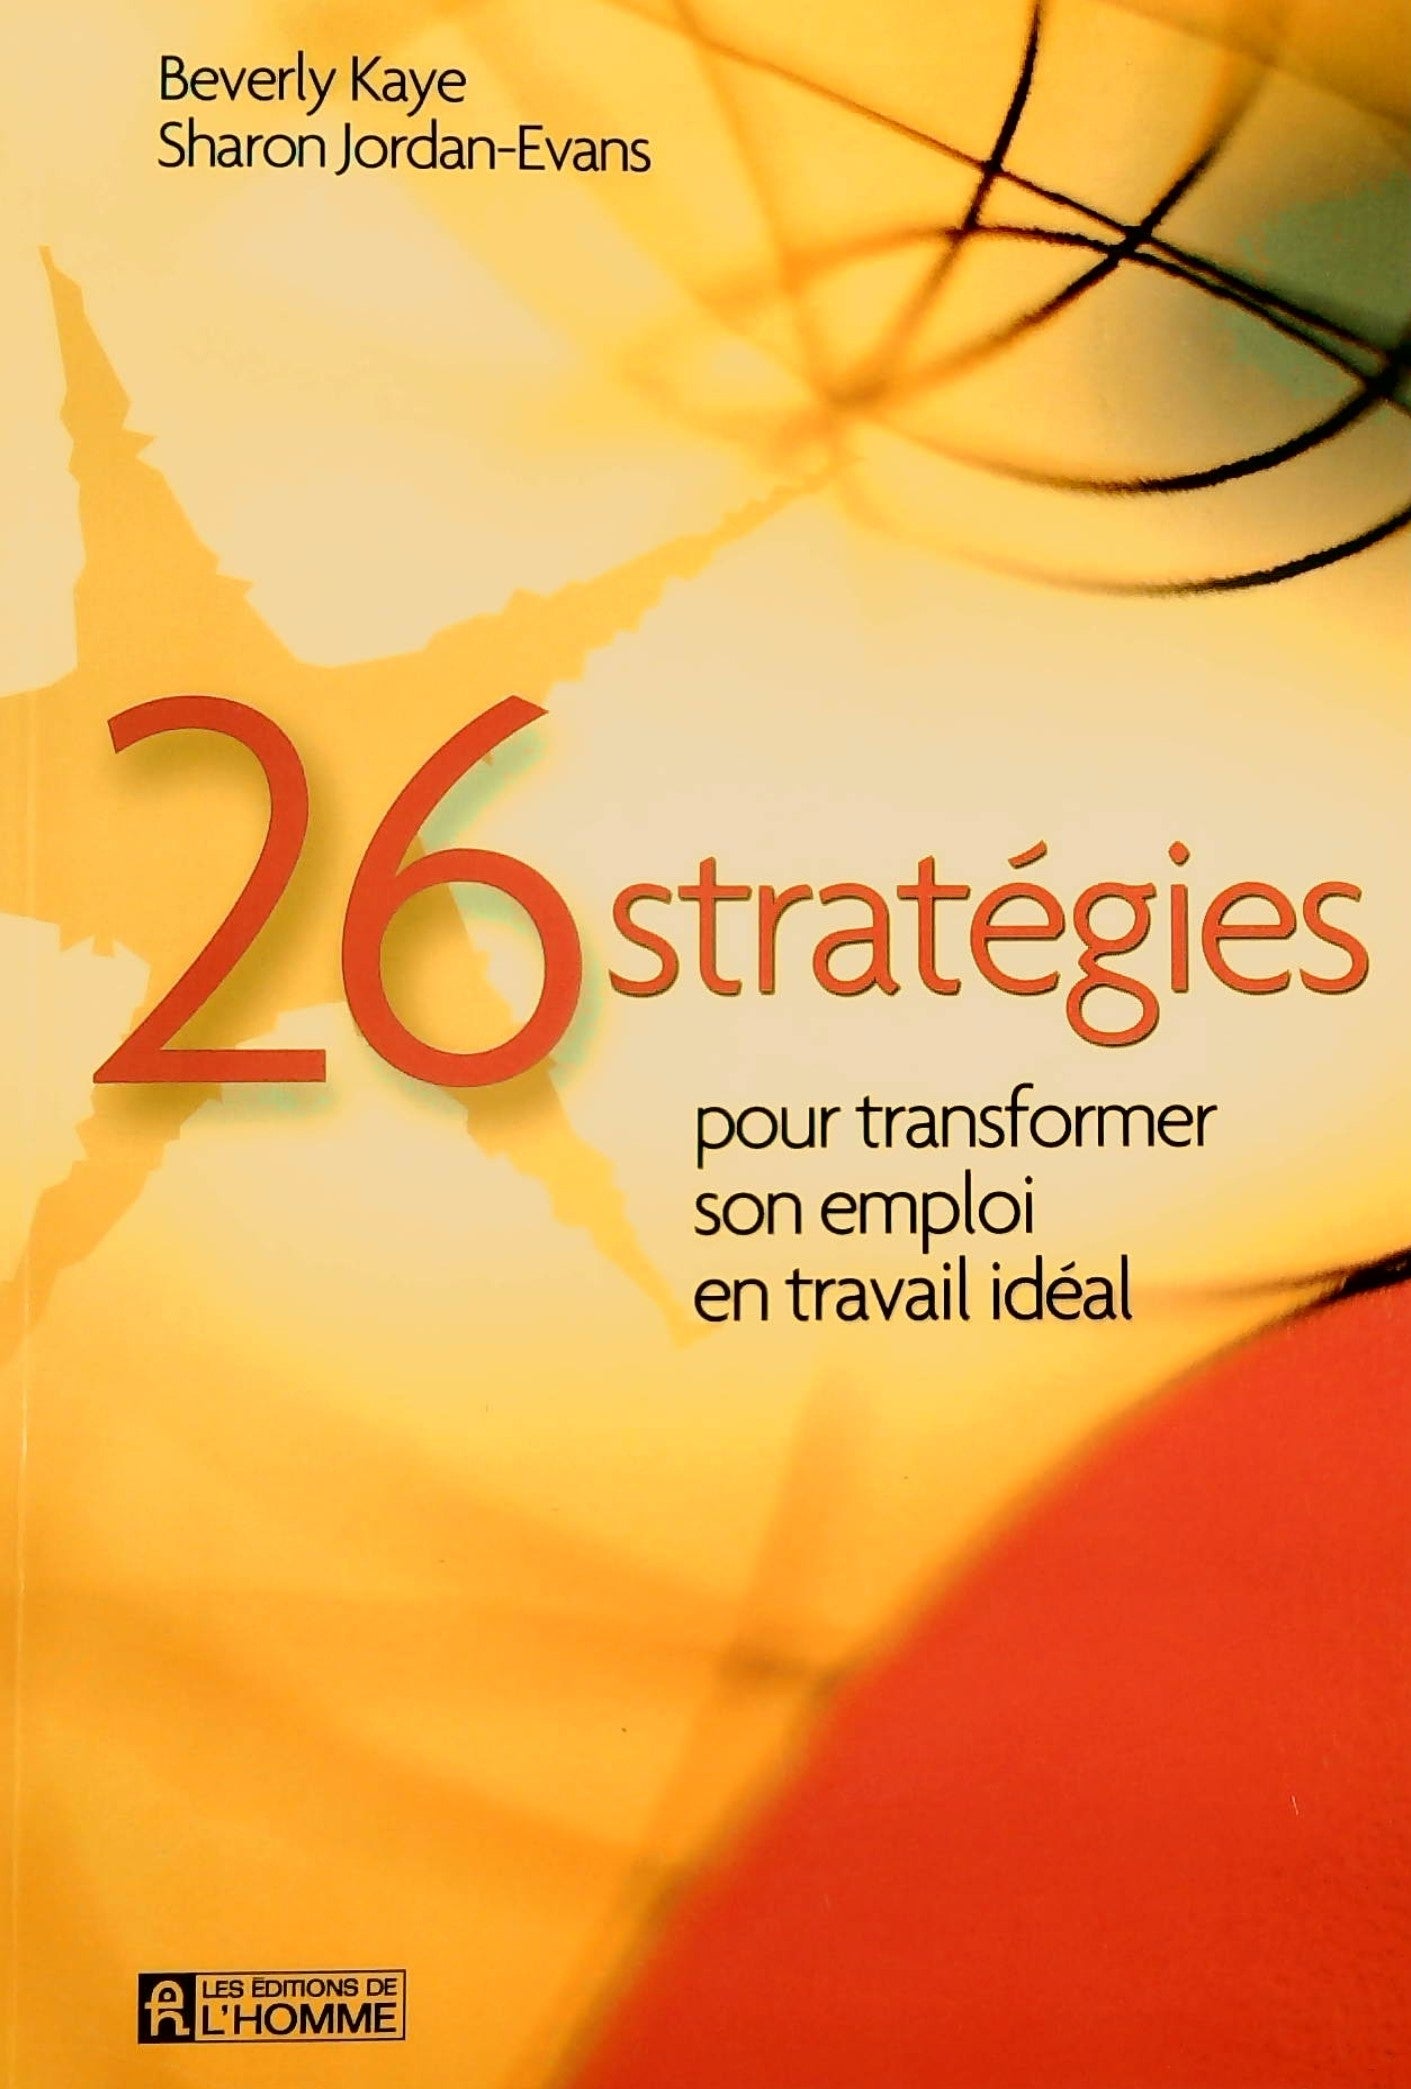 Livre ISBN 2761919157 26 Stratégies pour transformer som emploi en travail idéal (Beverly Kaye)